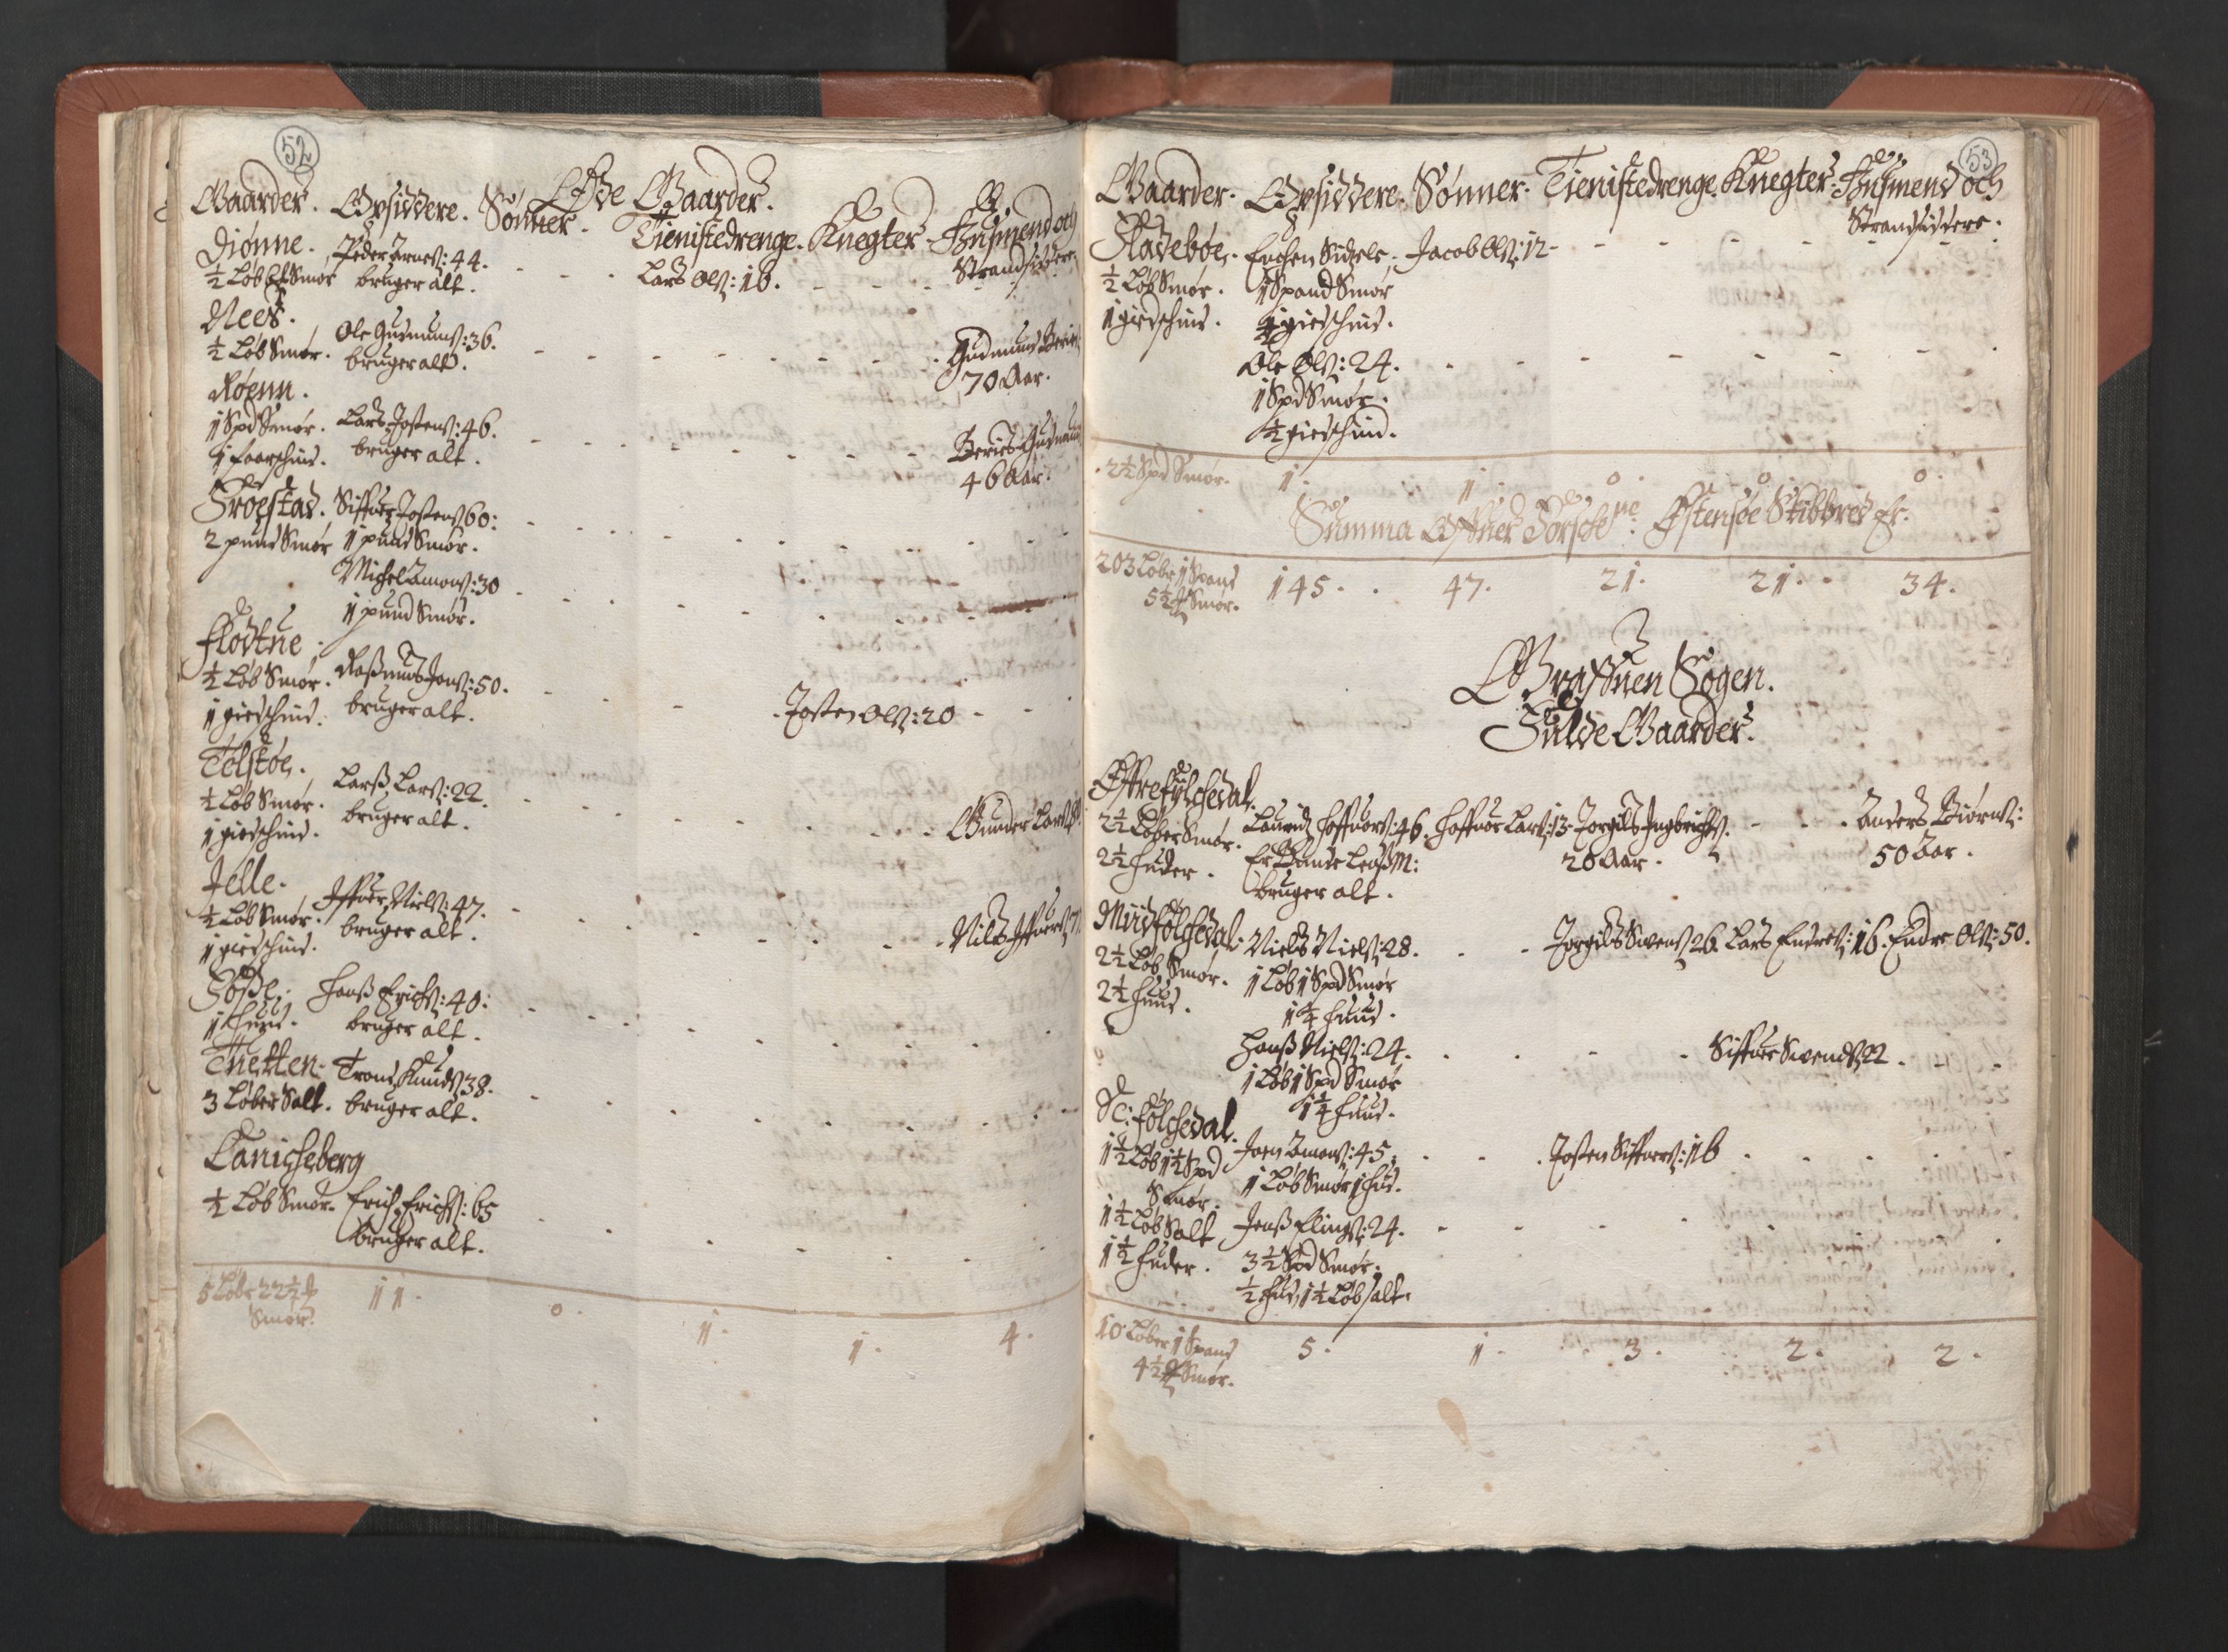 RA, Fogdenes og sorenskrivernes manntall 1664-1666, nr. 14: Hardanger len, Ytre Sogn fogderi og Indre Sogn fogderi, 1664-1665, s. 52-53